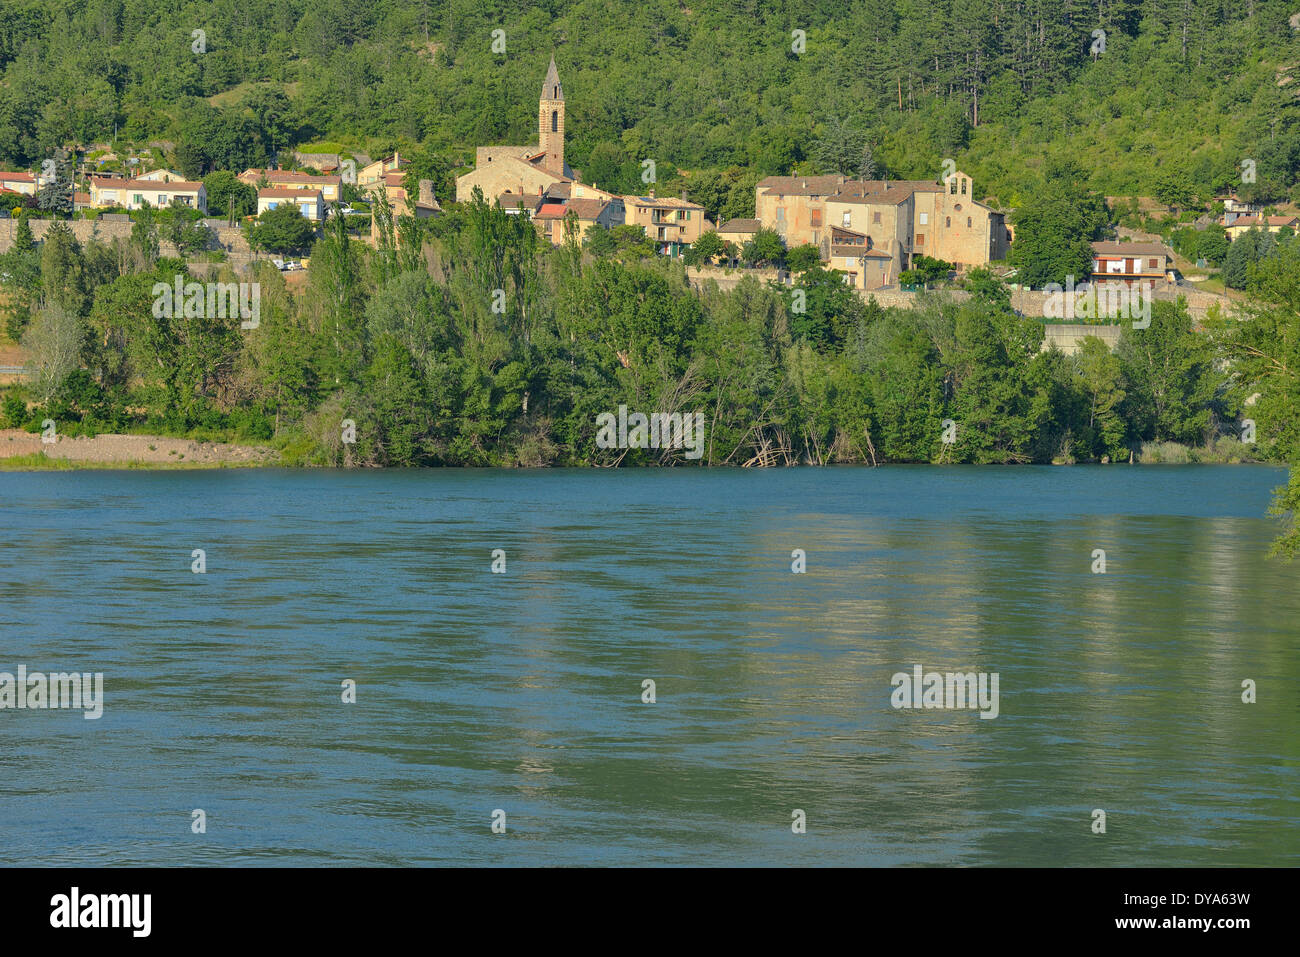 Europe, France, Provence, Vaucluse, Sisteron, Durance, river, village, Alpes-de-Haute-Provence, town Stock Photo